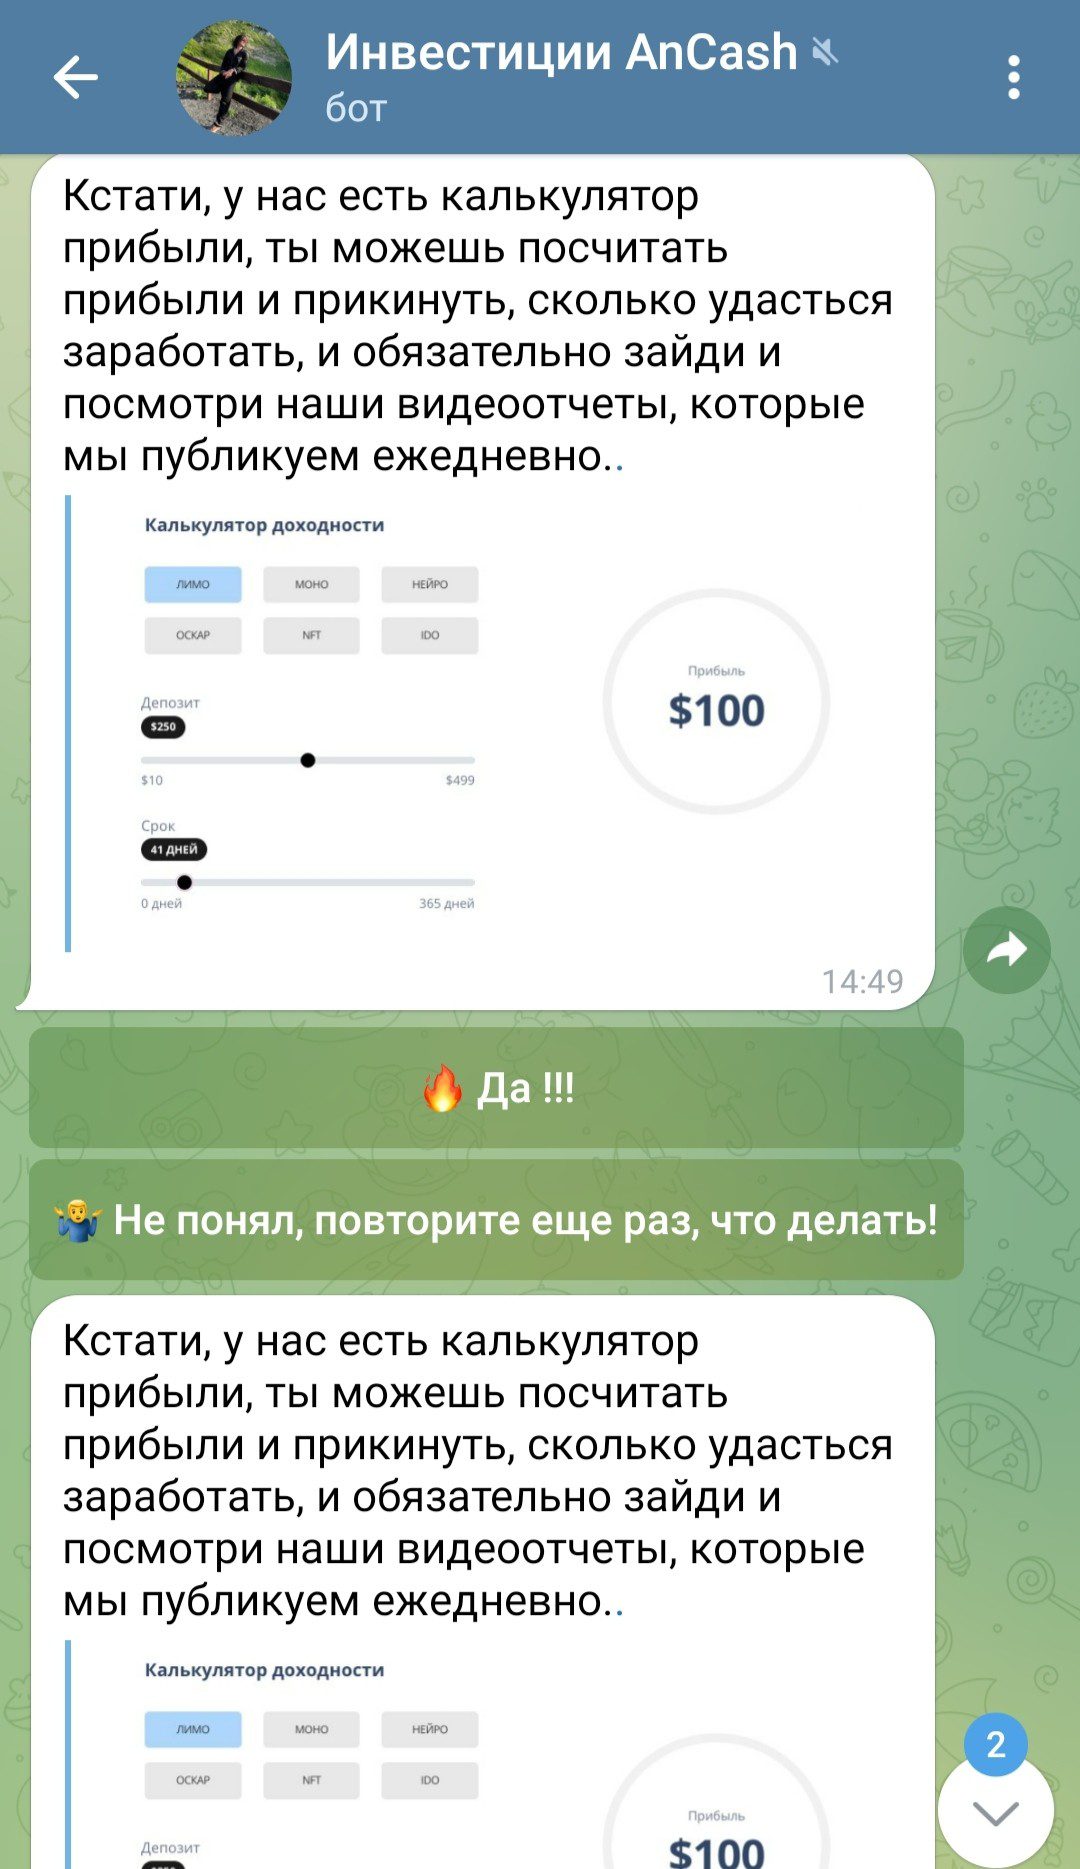 An cash Андрей Шабанов телеграм